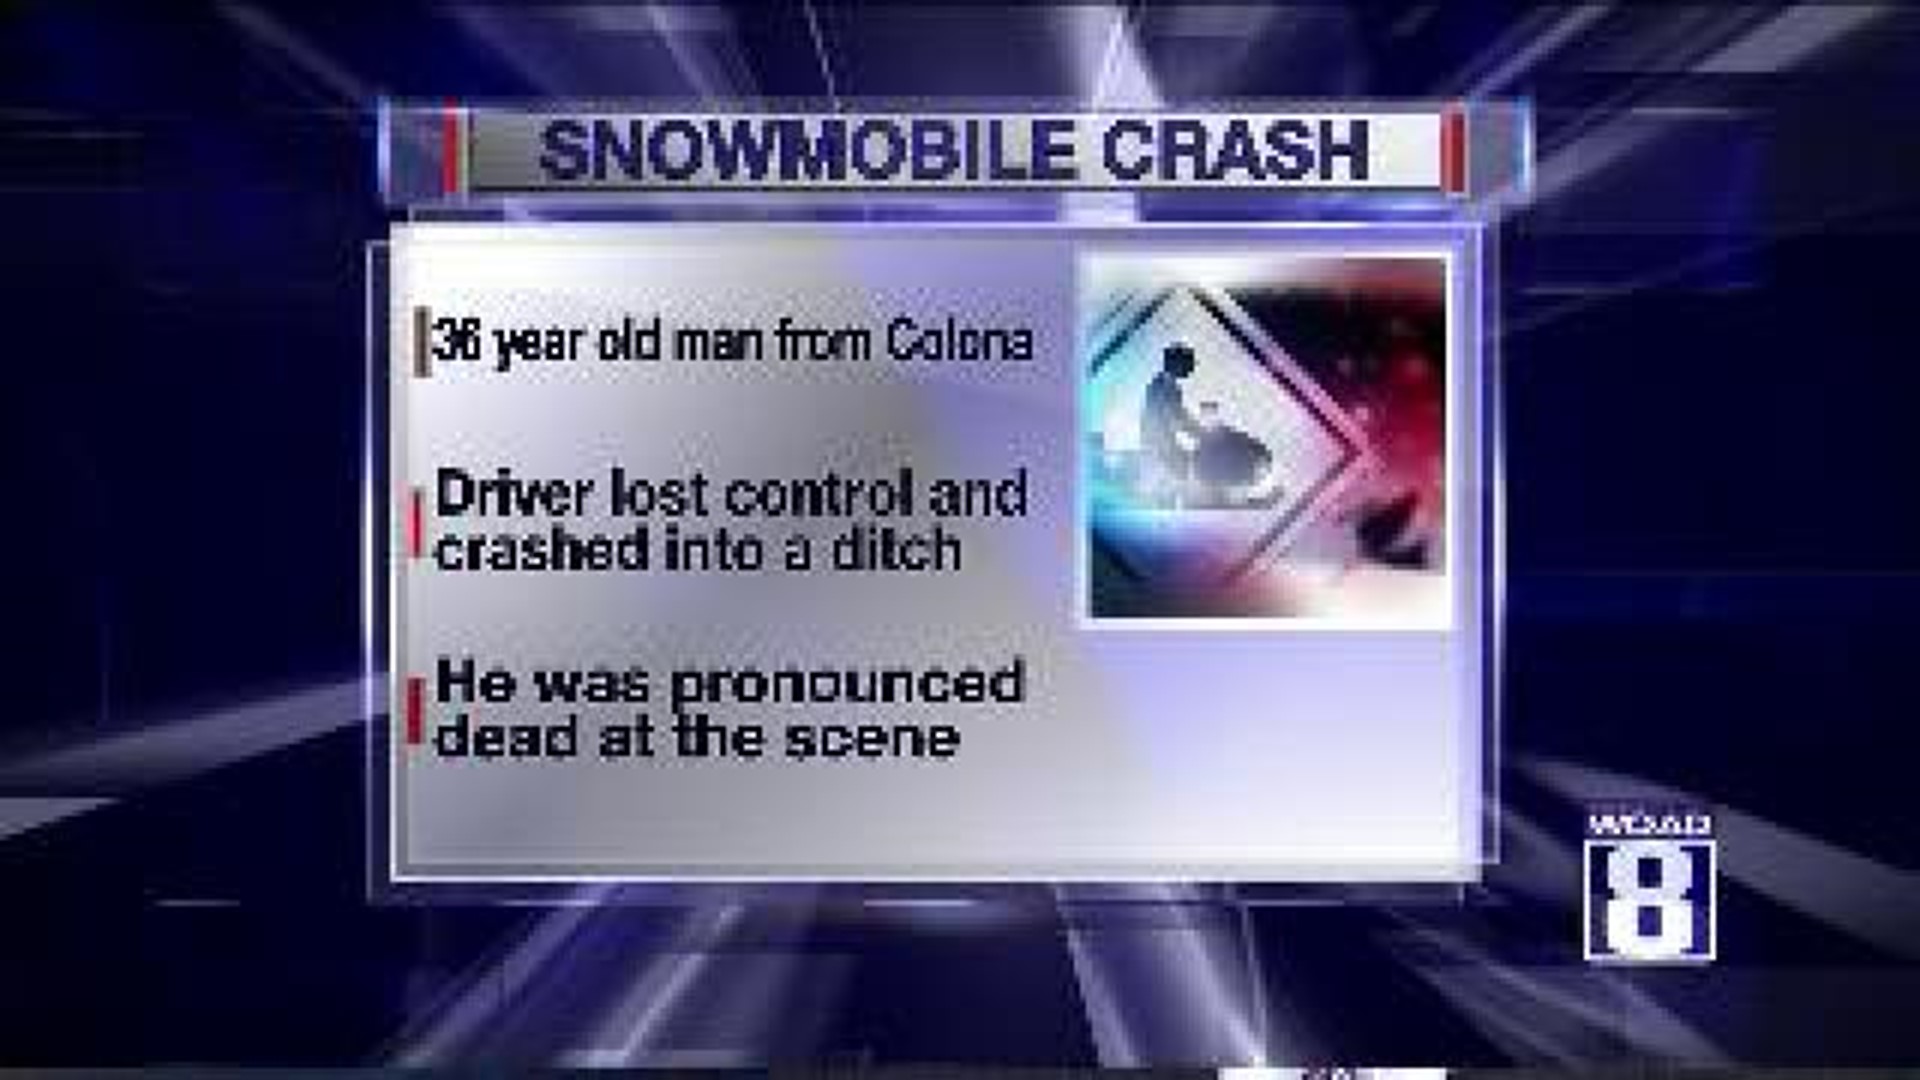 Colona man died in snowmobile crash